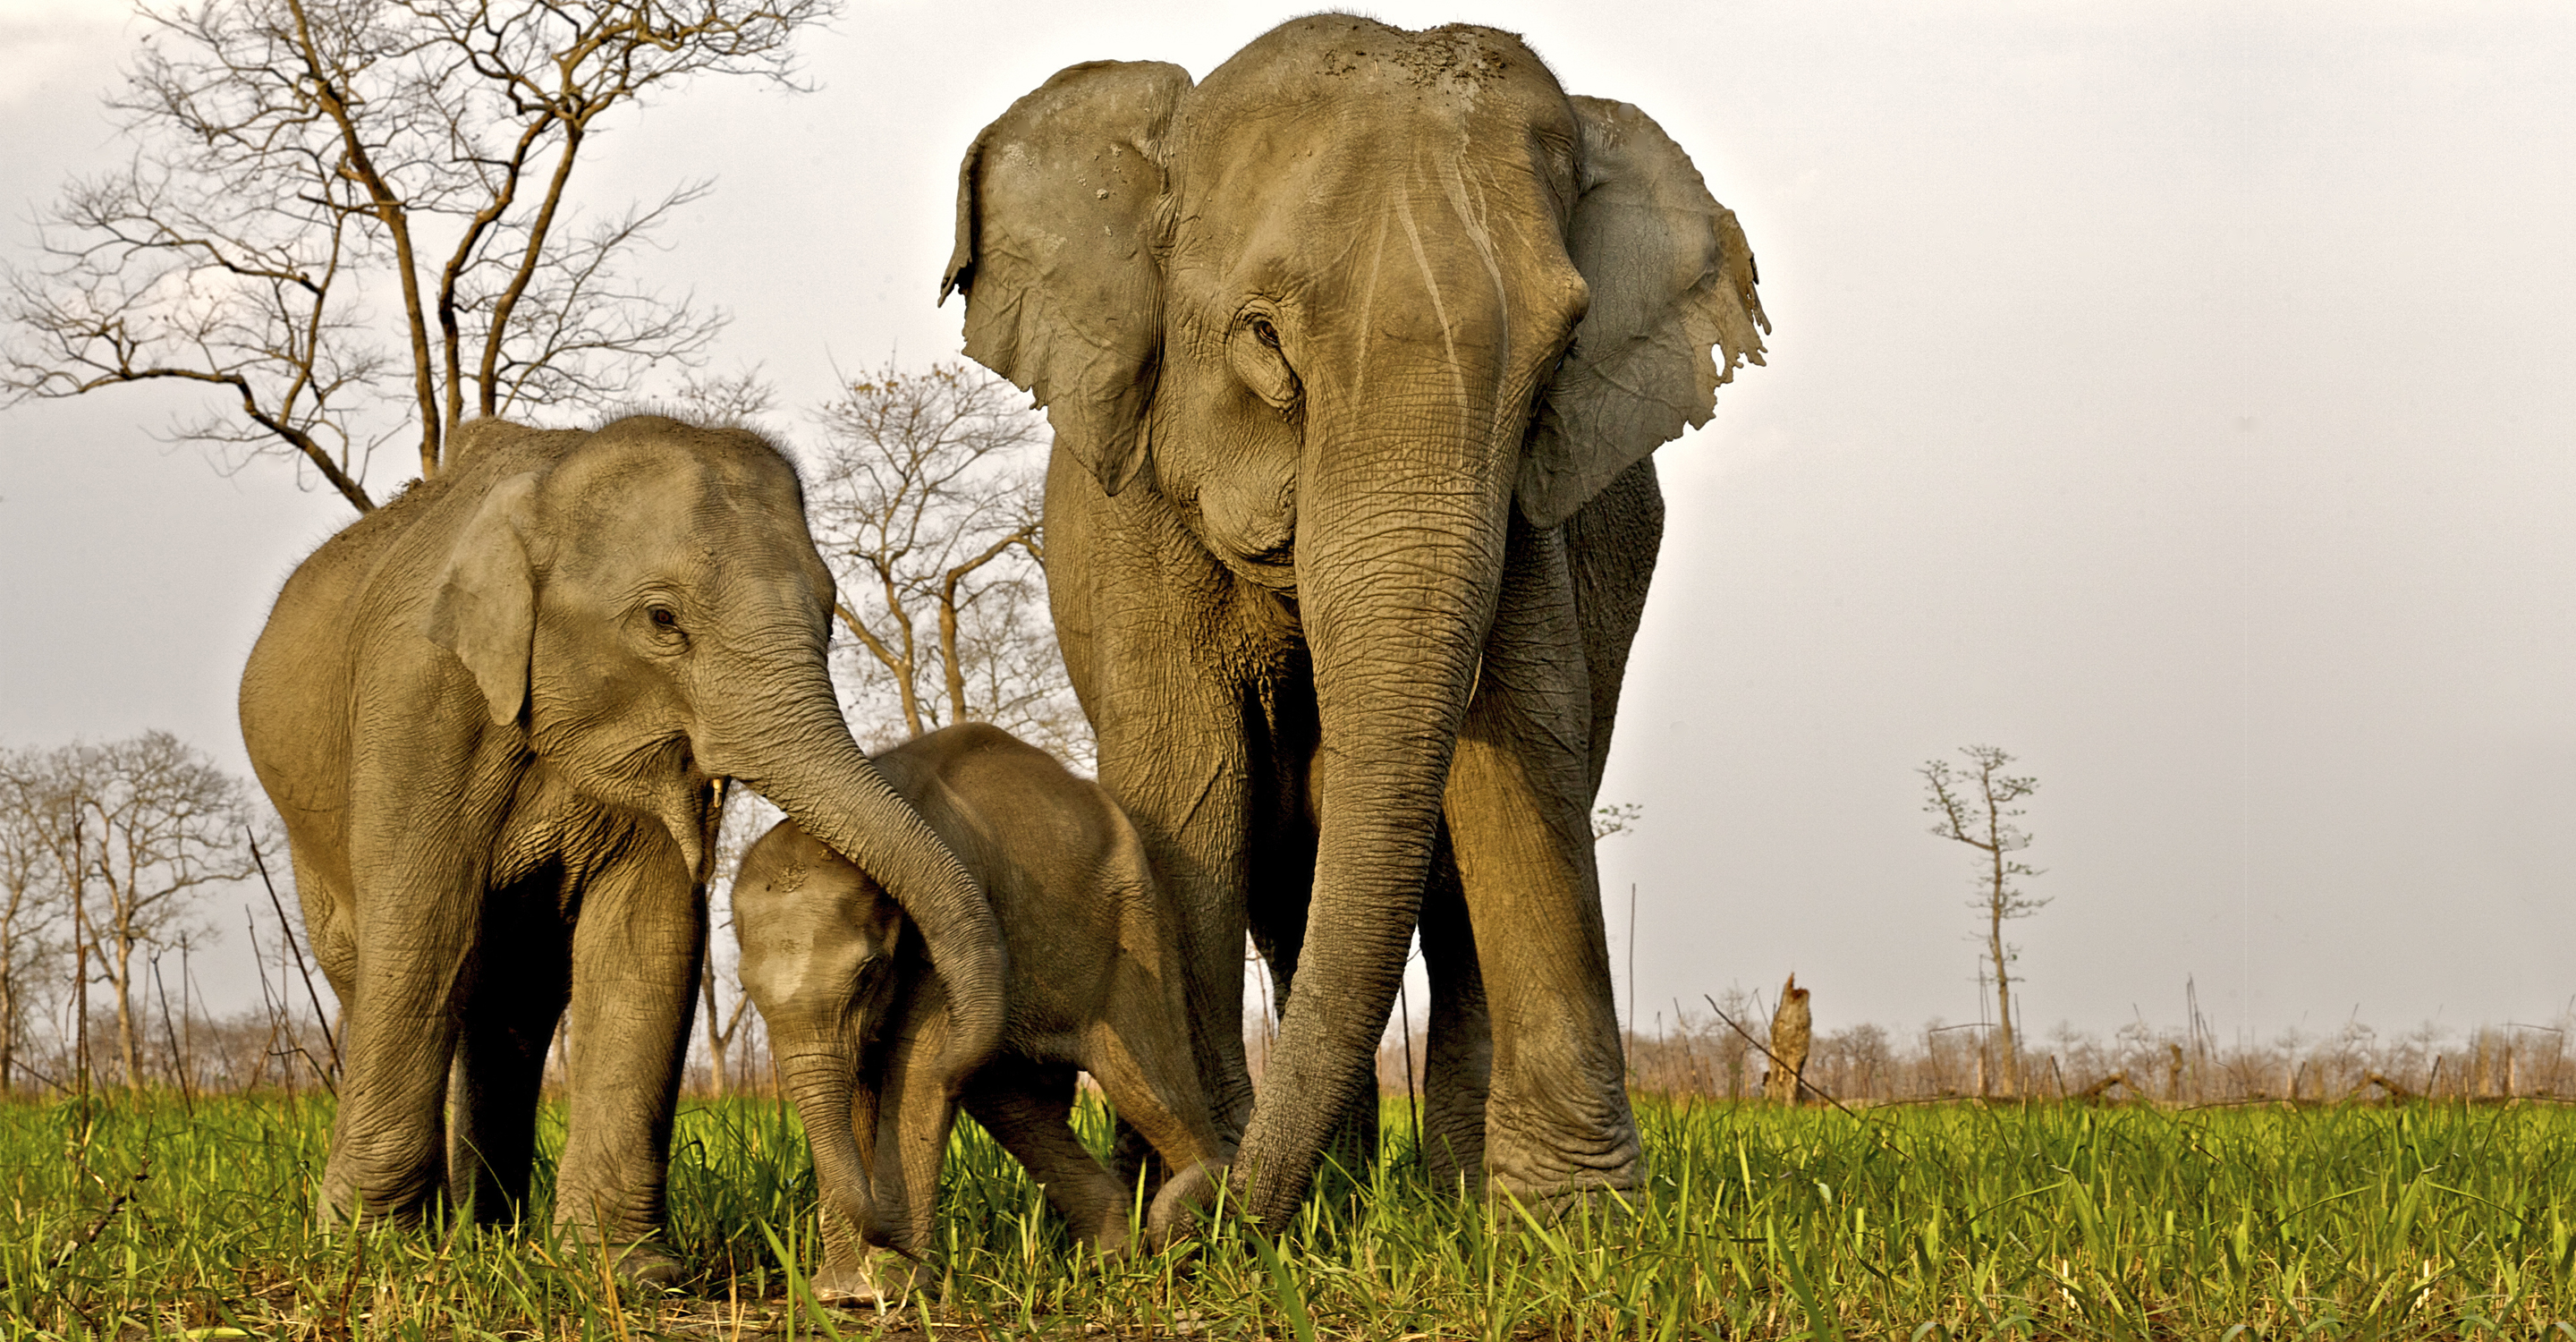 Asian elephant with her calves in Kaziranga National Park, India